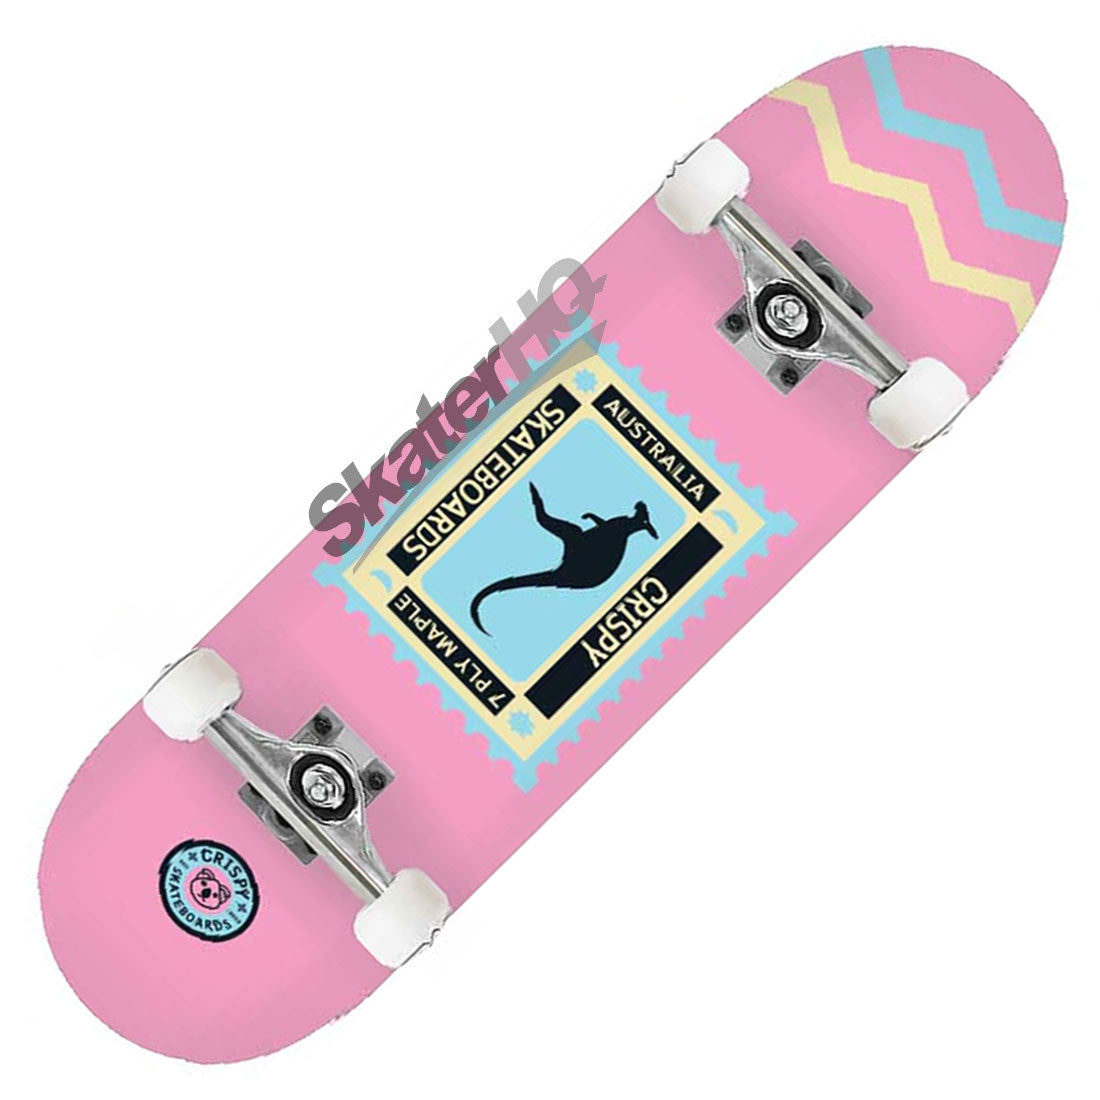 Crispy Rookie Roo 8.0 Complete - Pink Skateboard Completes Modern Street